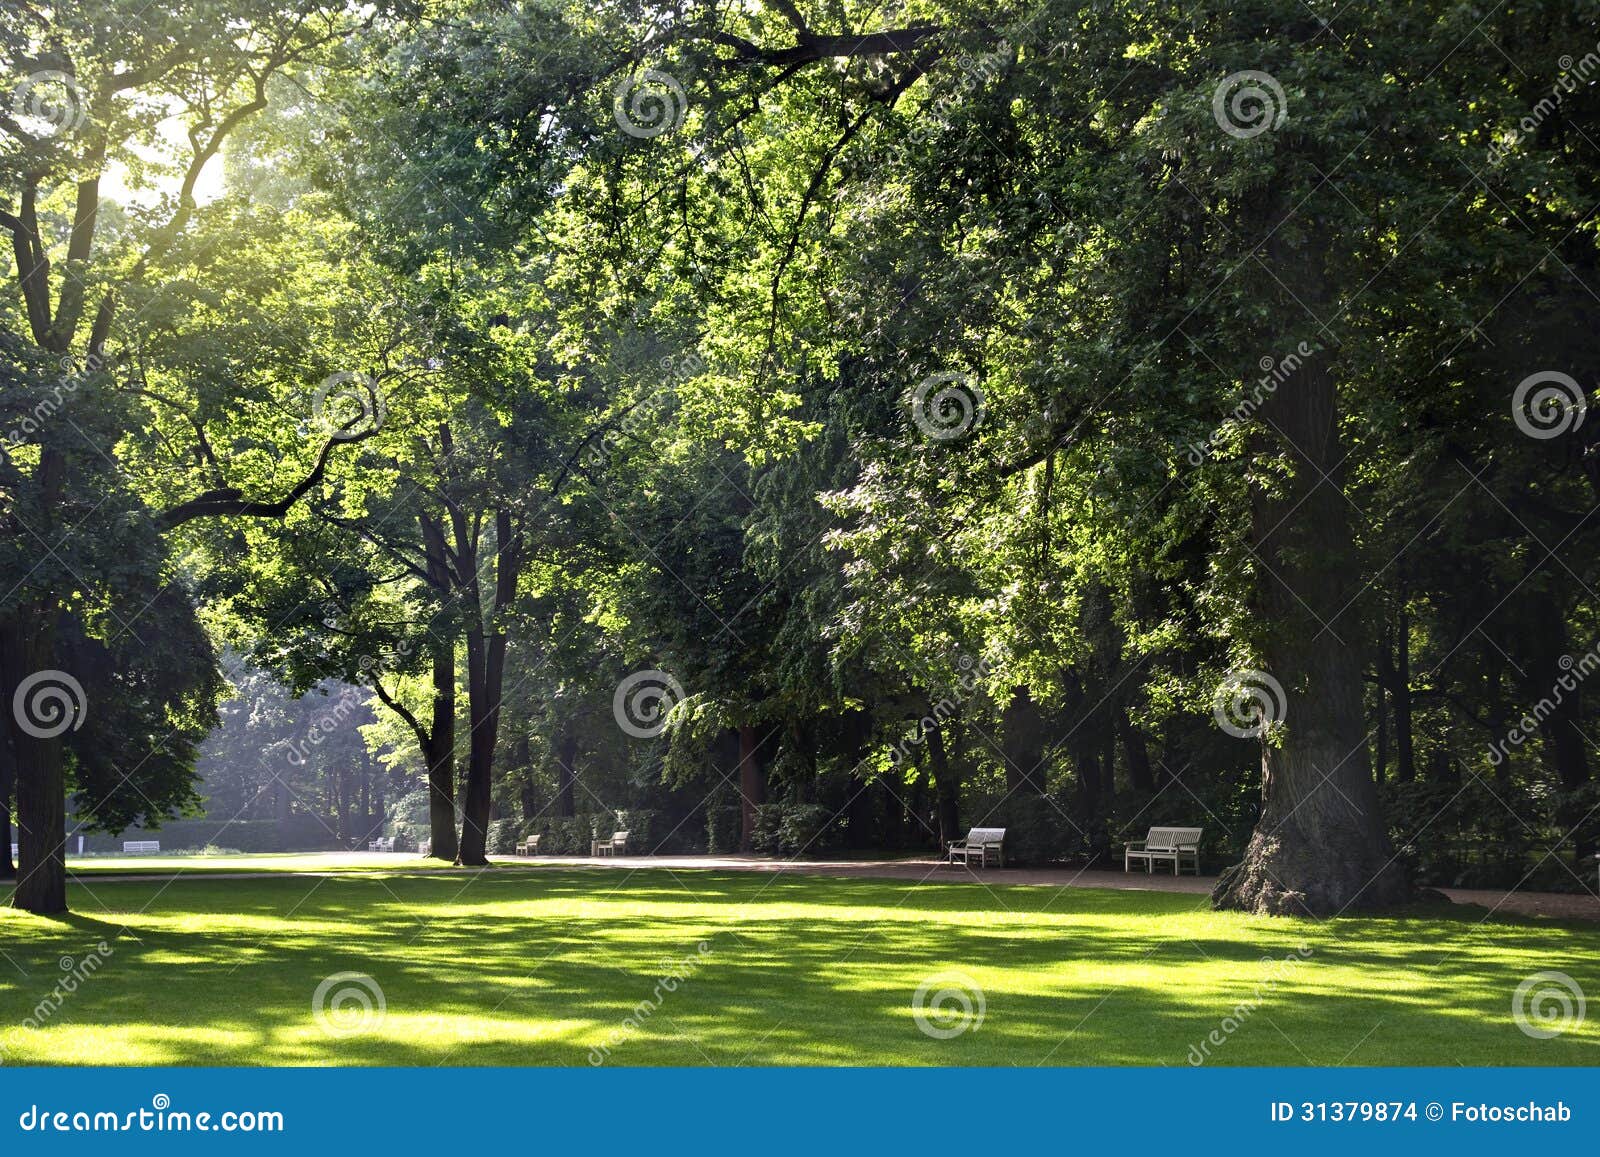 Old, sunny park stock photo. Image of foliage, grass - 31379874